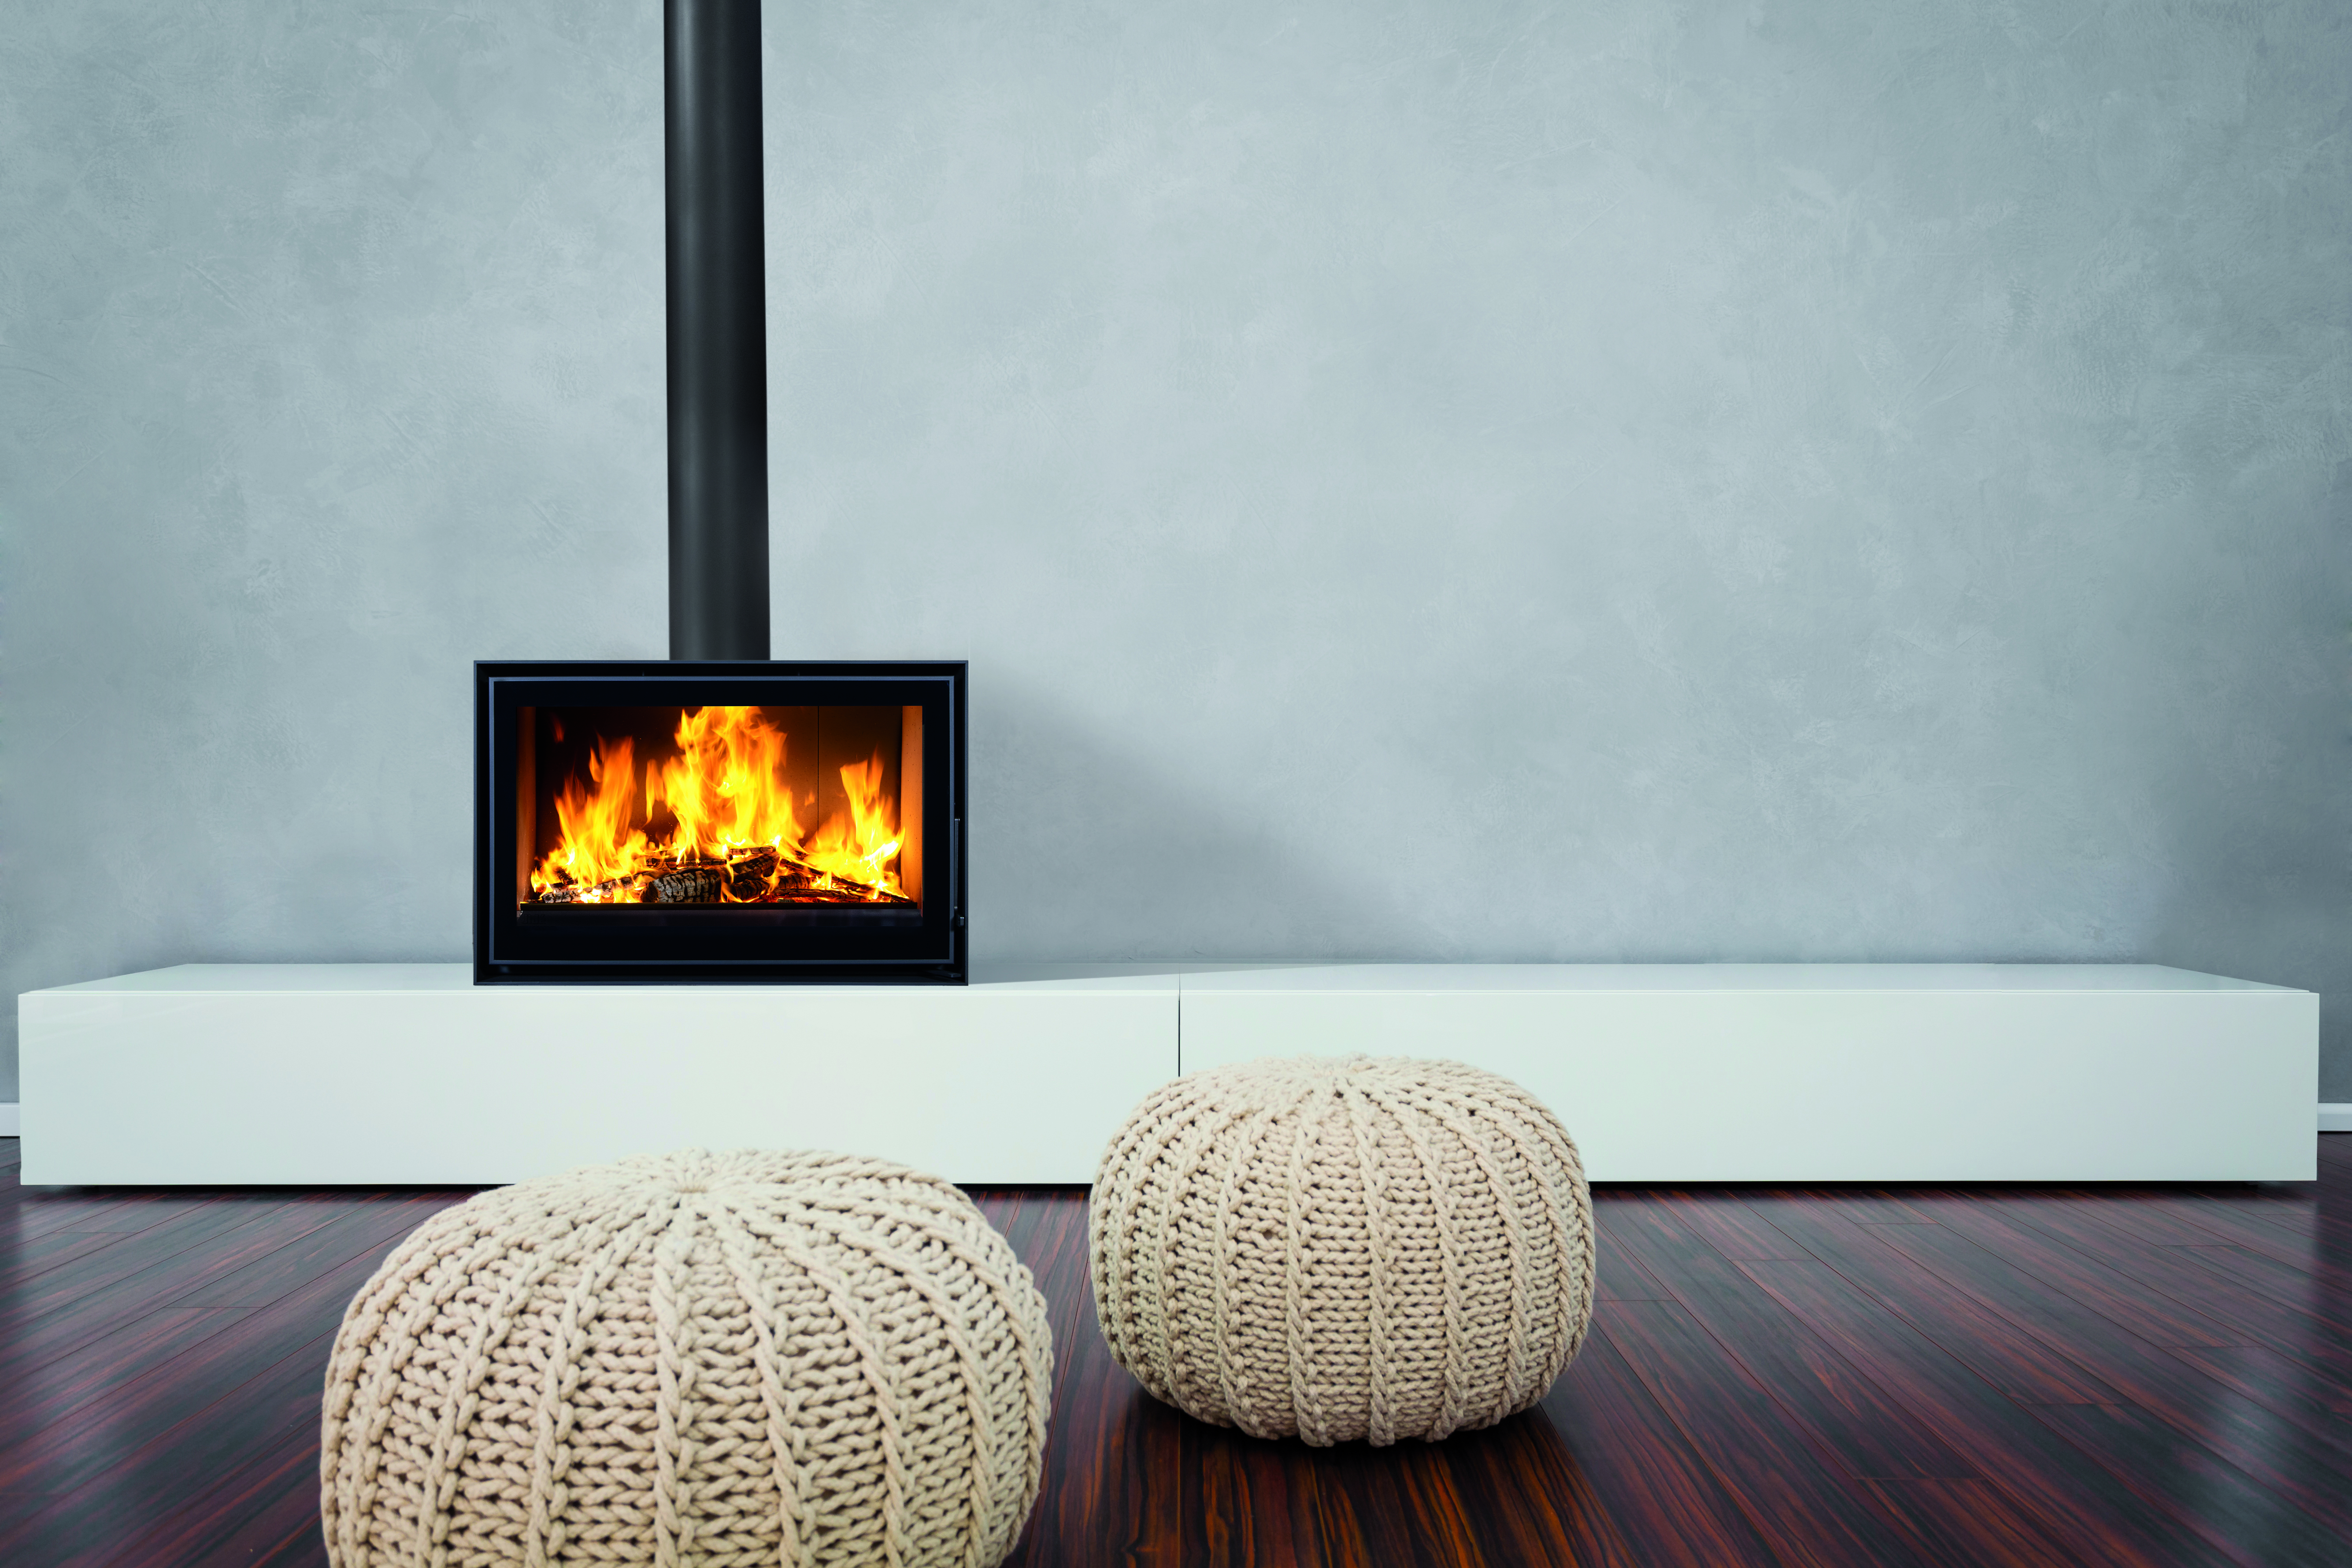 Photo of a wood insert fireplace